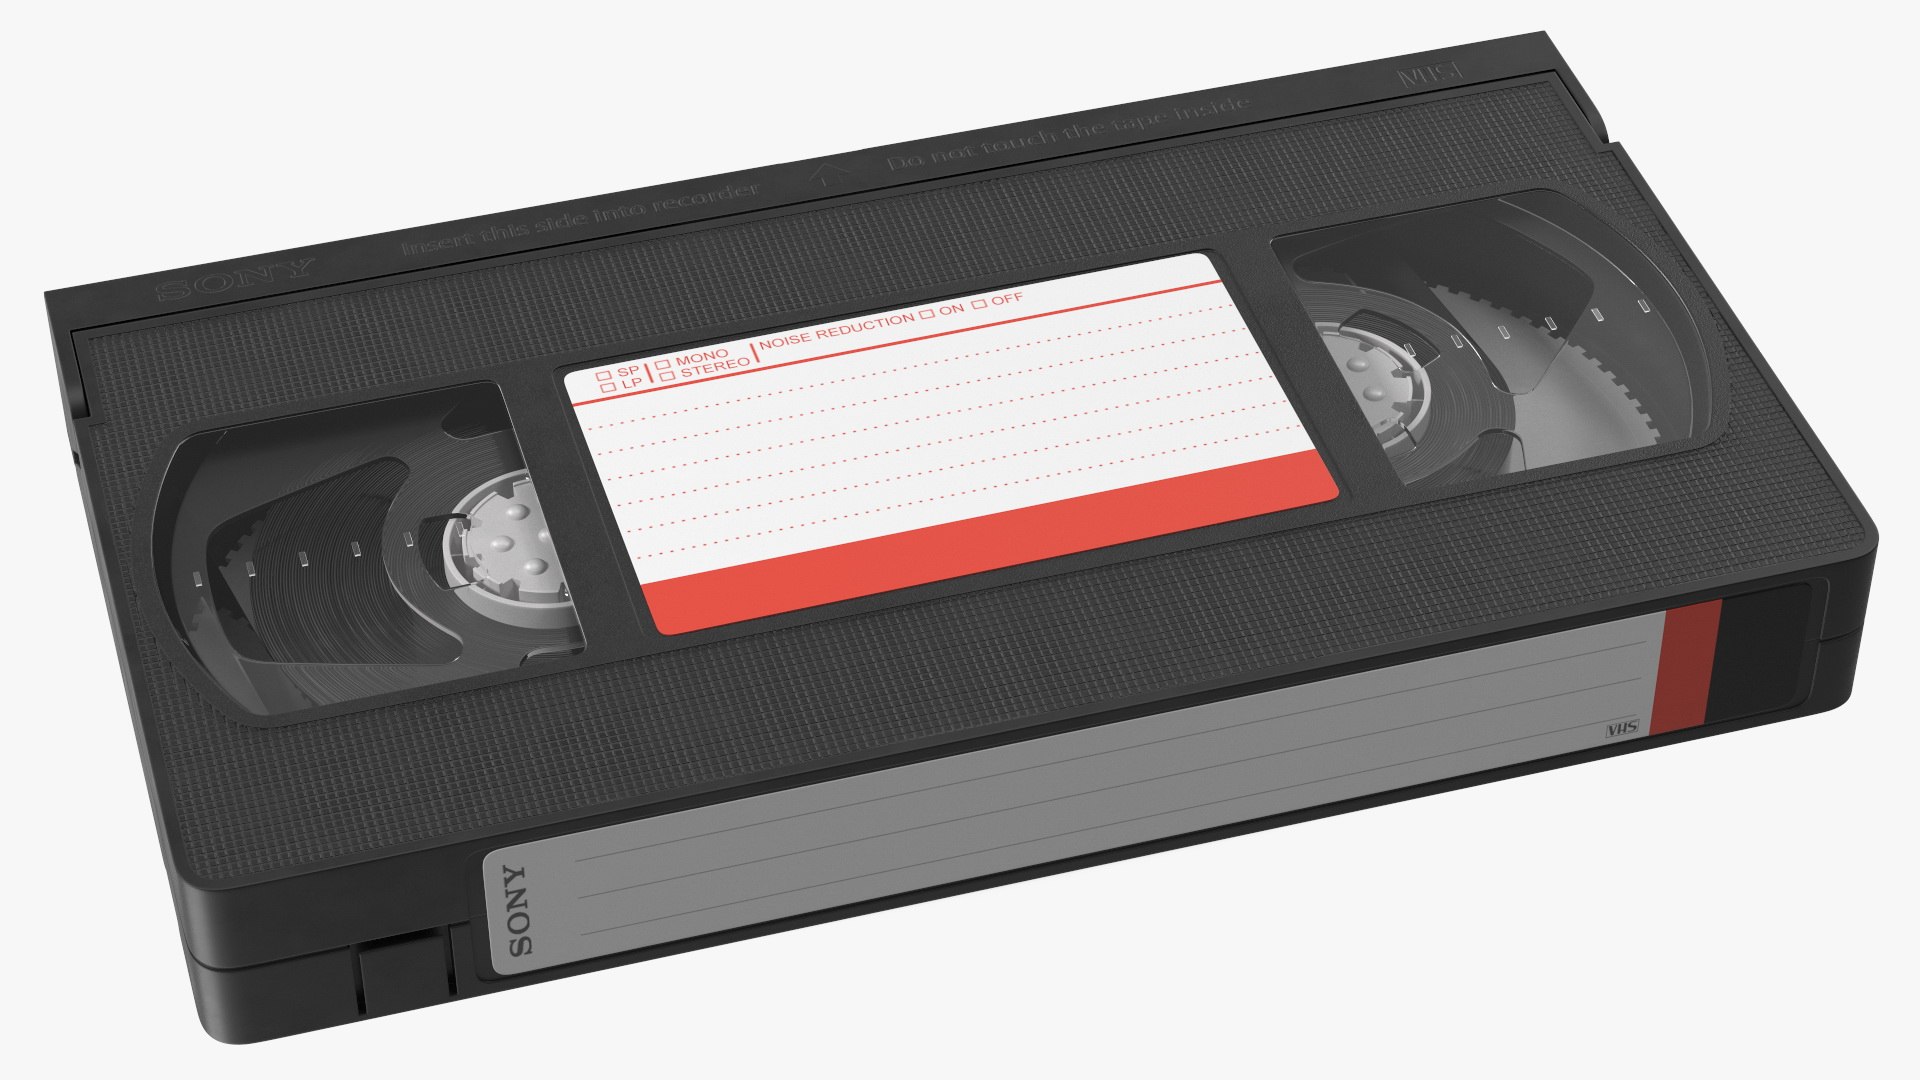 Sony Dynamicron E180 VHS Video Cassette model - TurboSquid 1787340